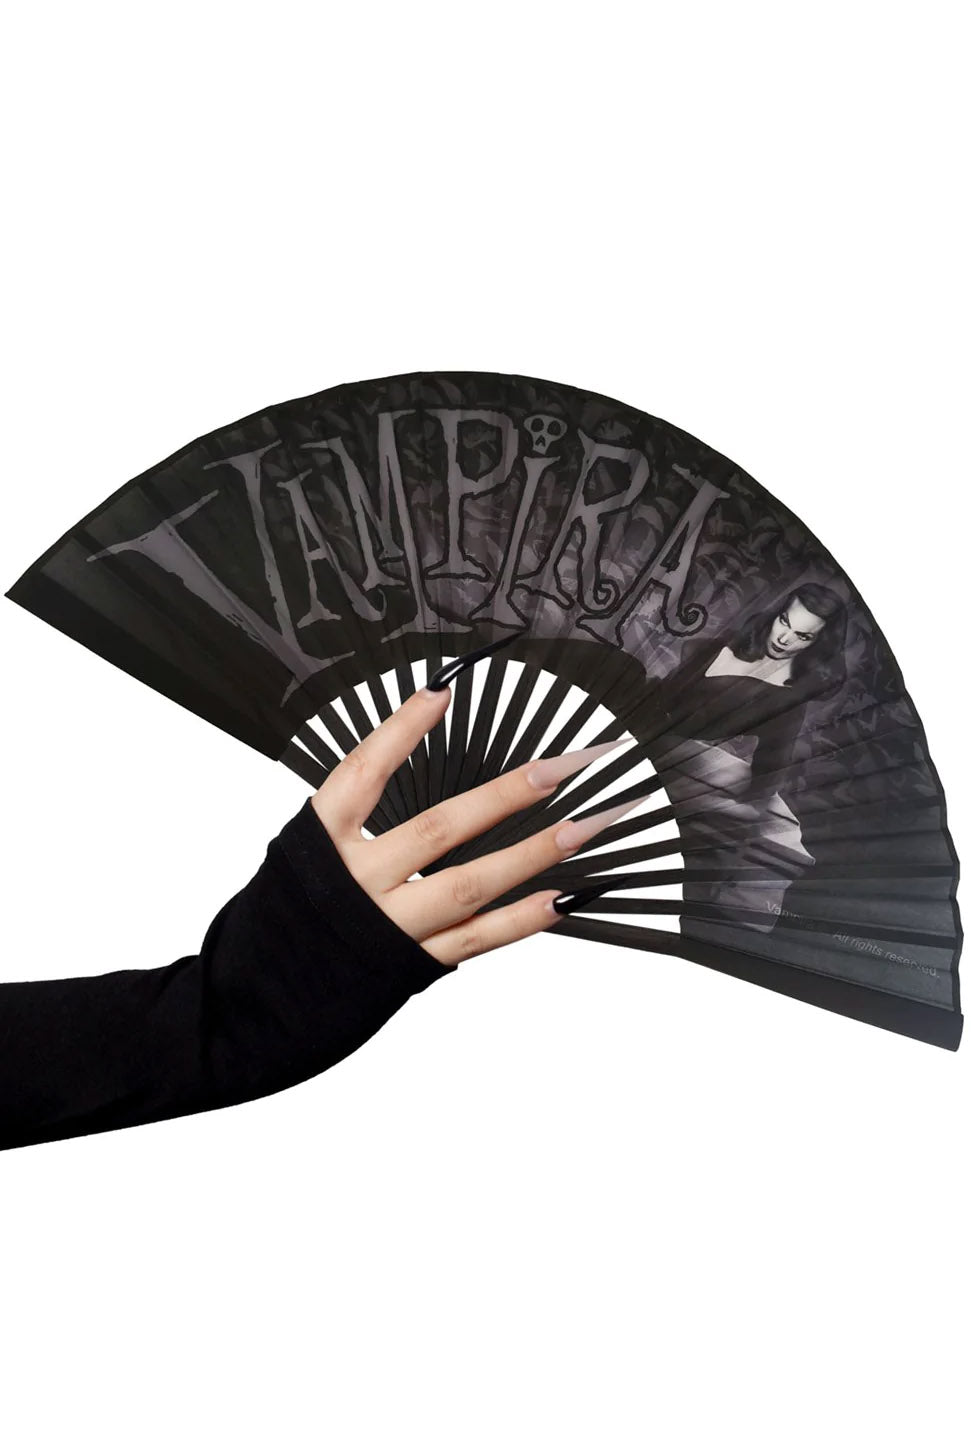 Vampira Coffin Fabric Fan